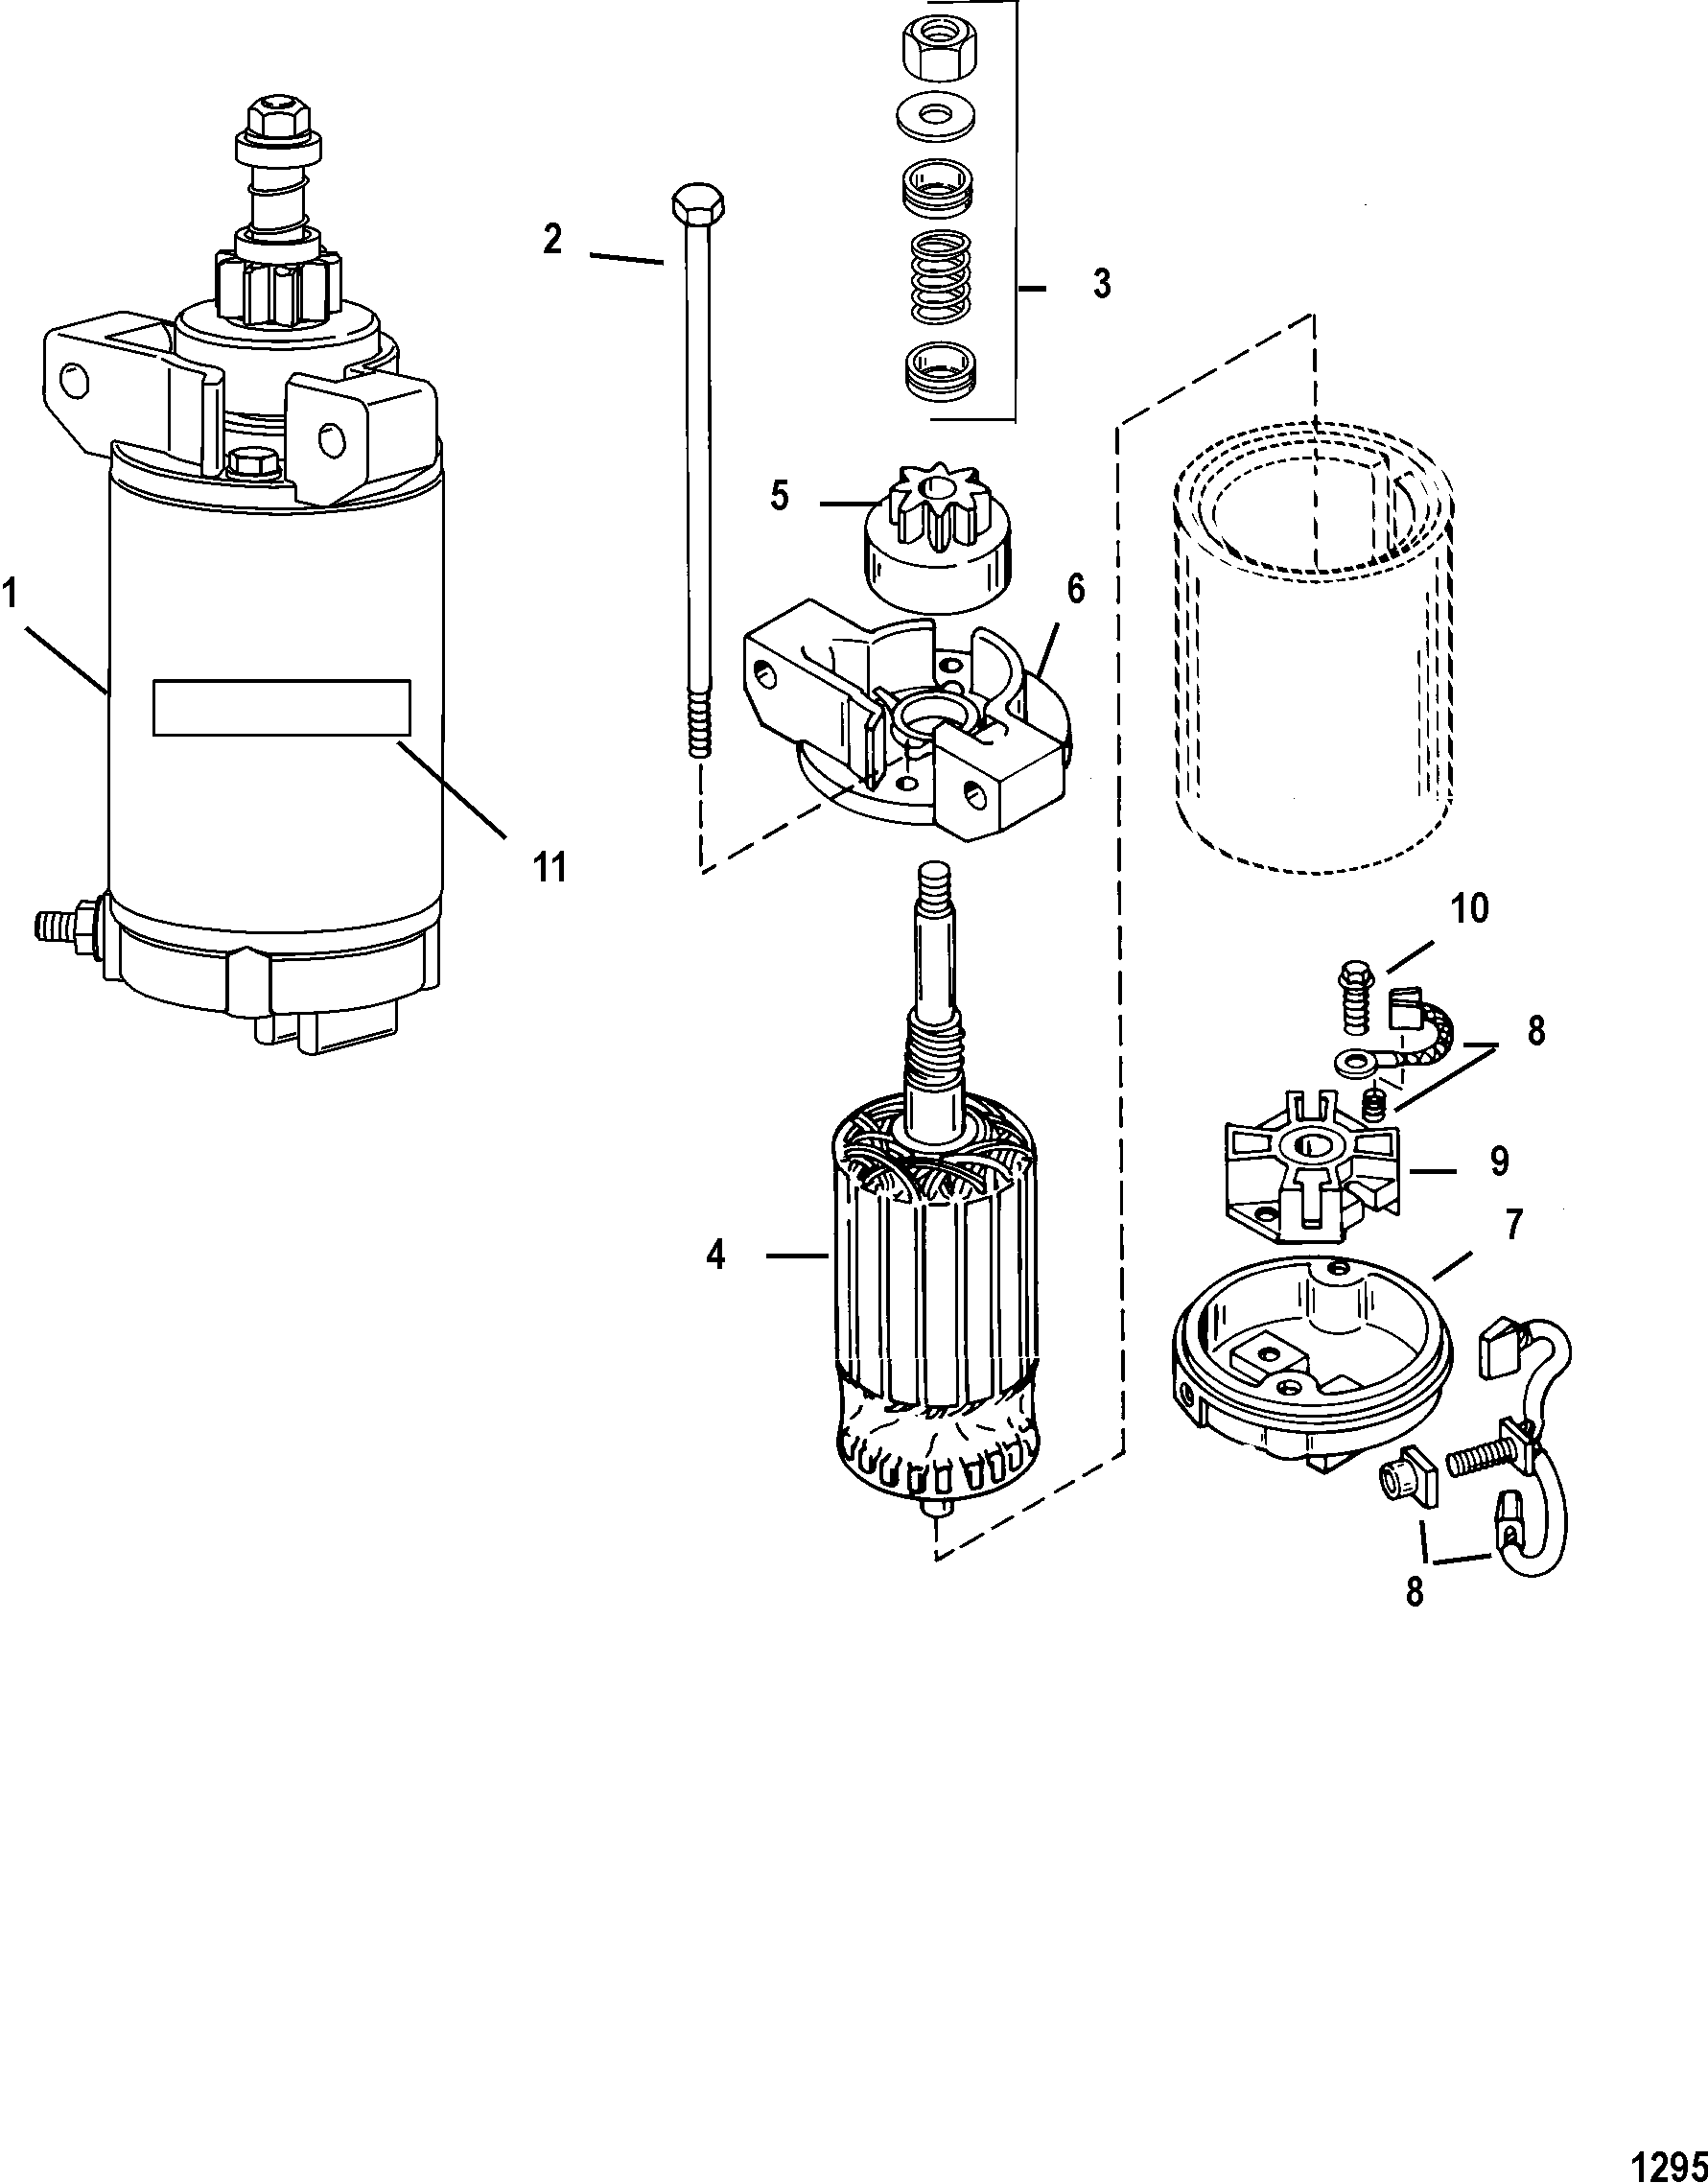 Starter Motor(Serial Number 1B249767 and Below)